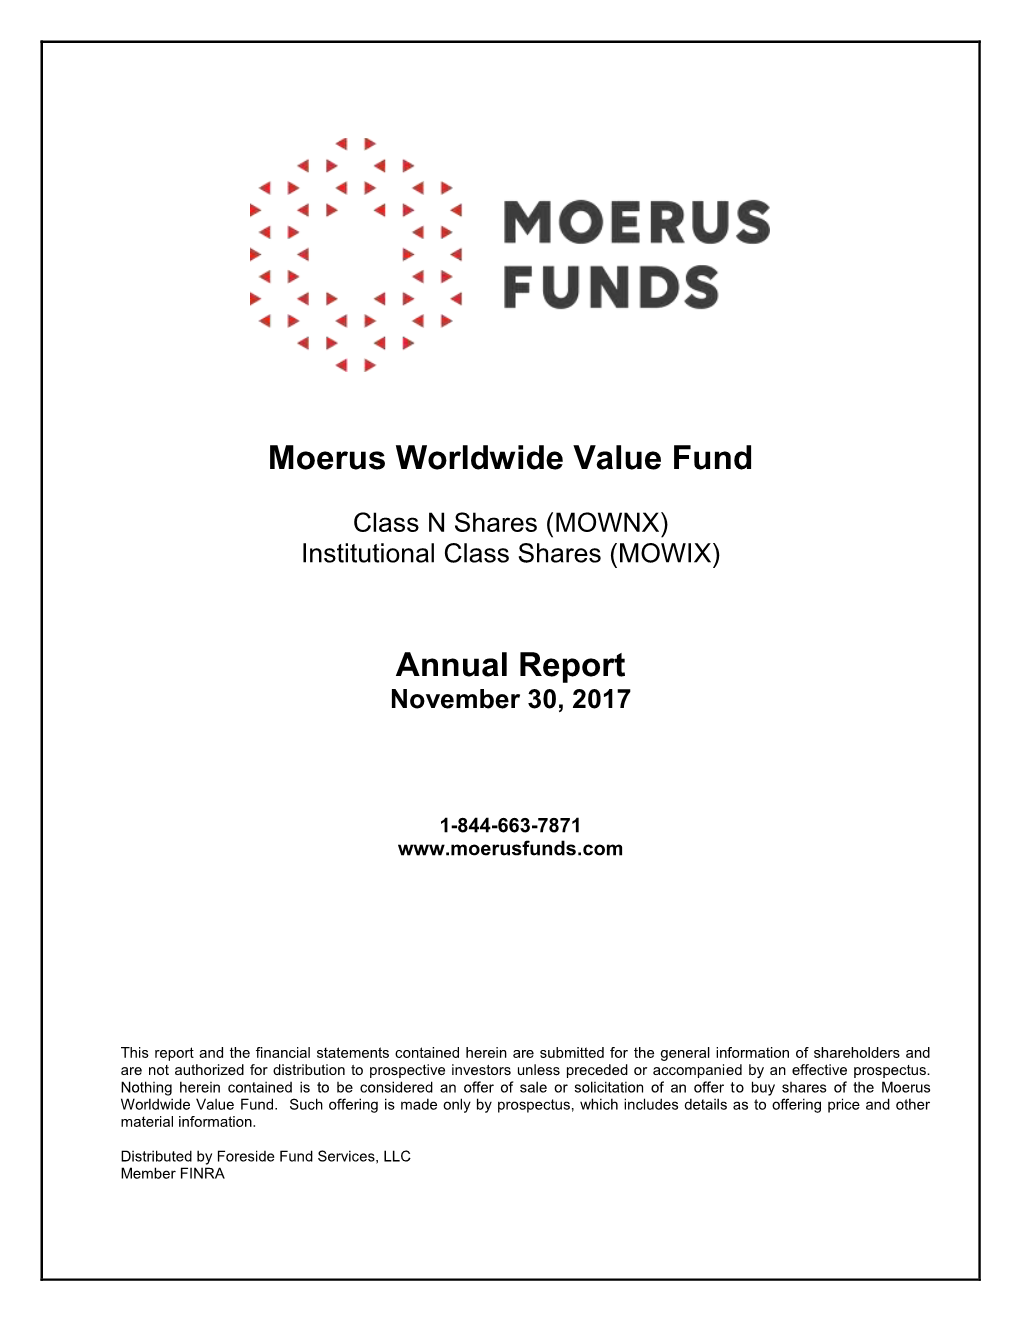 Moerus Worldwide Value Fund Annual Report